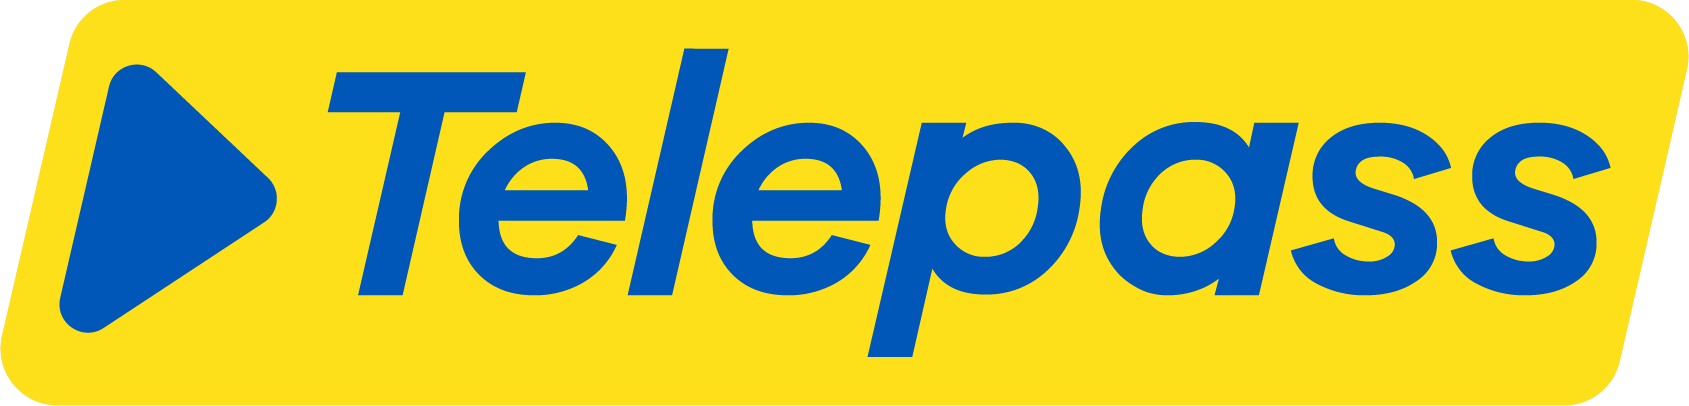 Logo Telepass